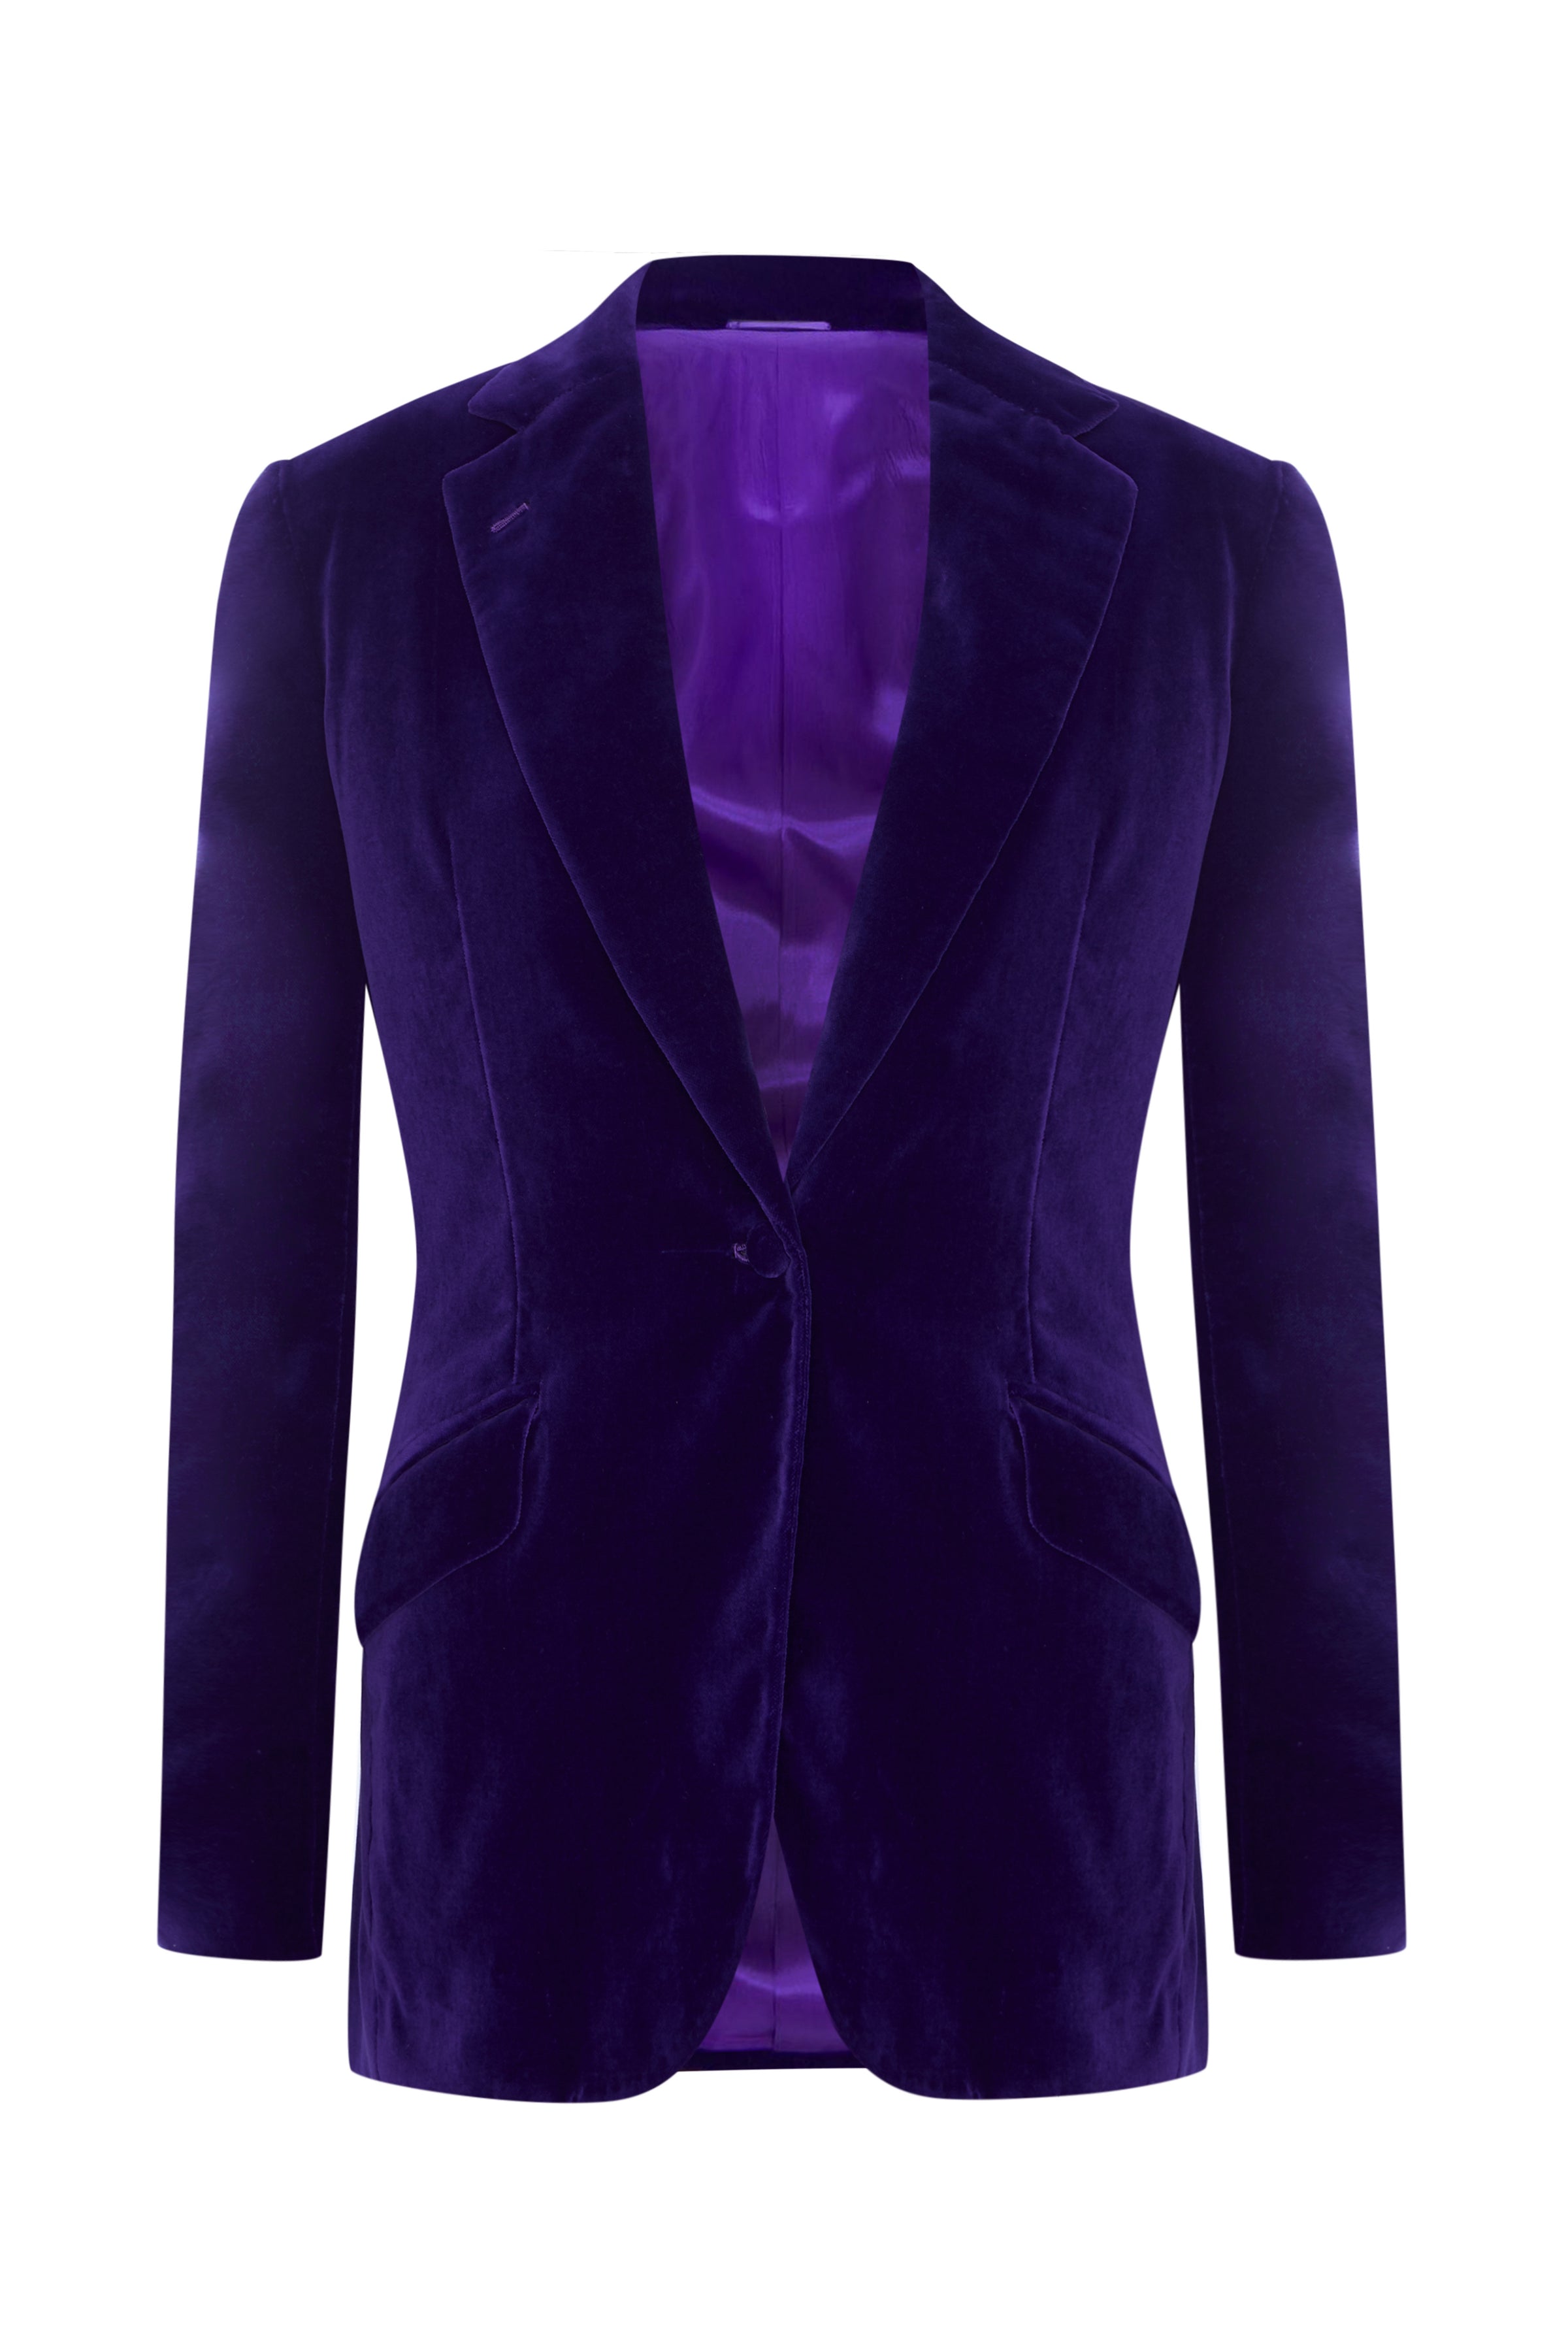 Purple Velvet Duster Coat - Purple (XSmall - 3X) * RESTOCK - The Pink  Porcupine ltd.